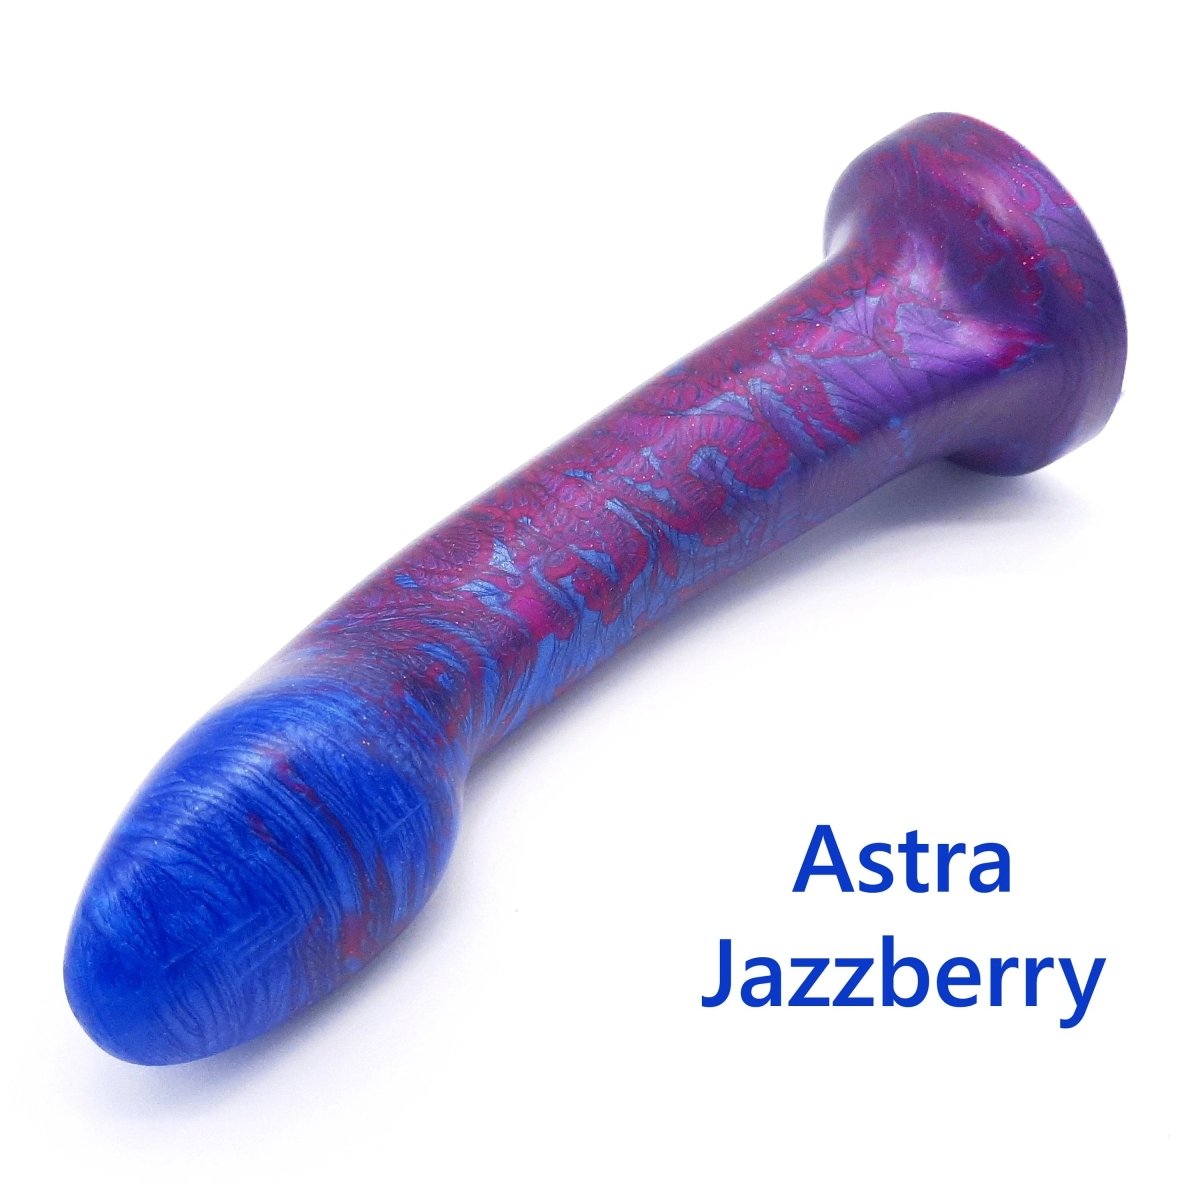 6.5" Astra - Silicone G-Spot Dildo - Jazzberry - RodeoH